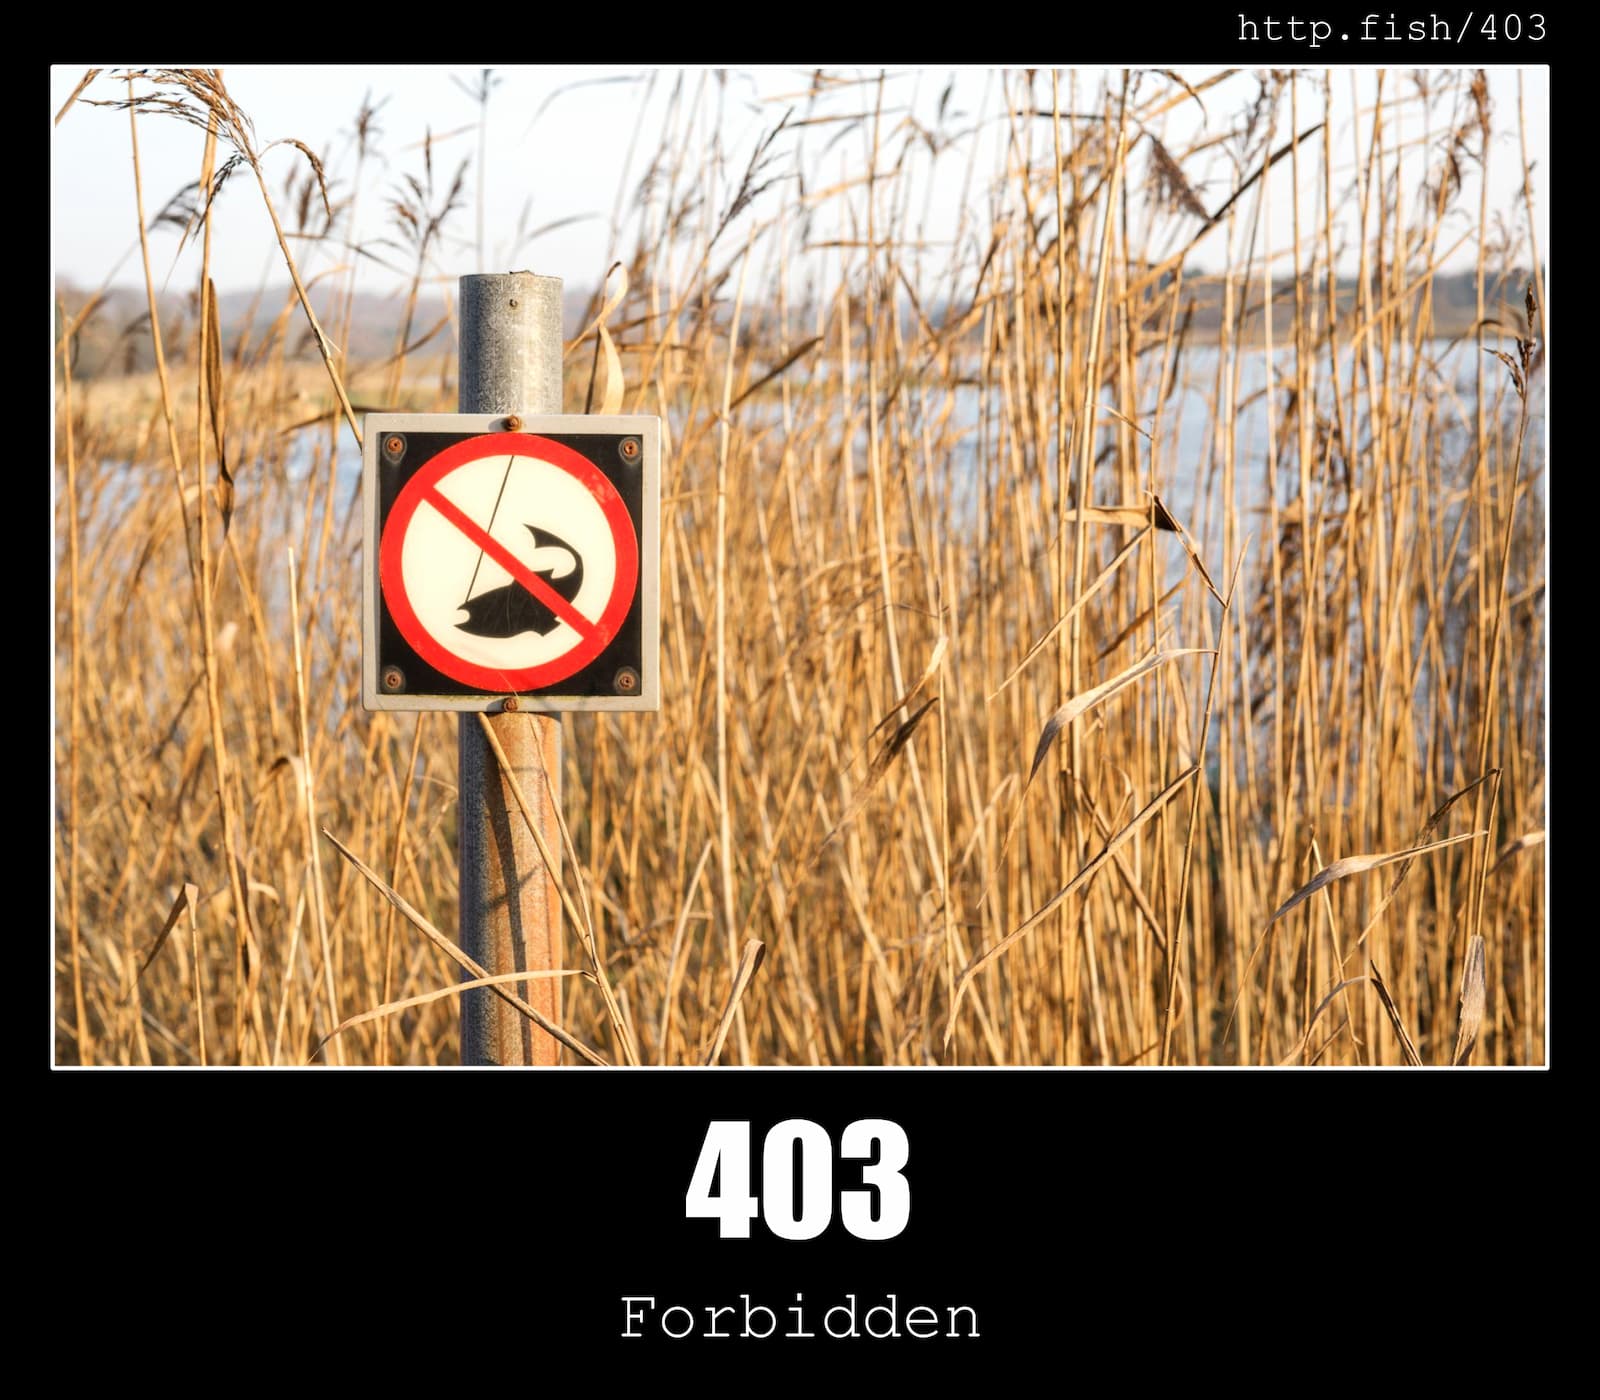 HTTP Status Code 403 Forbidden & Fish